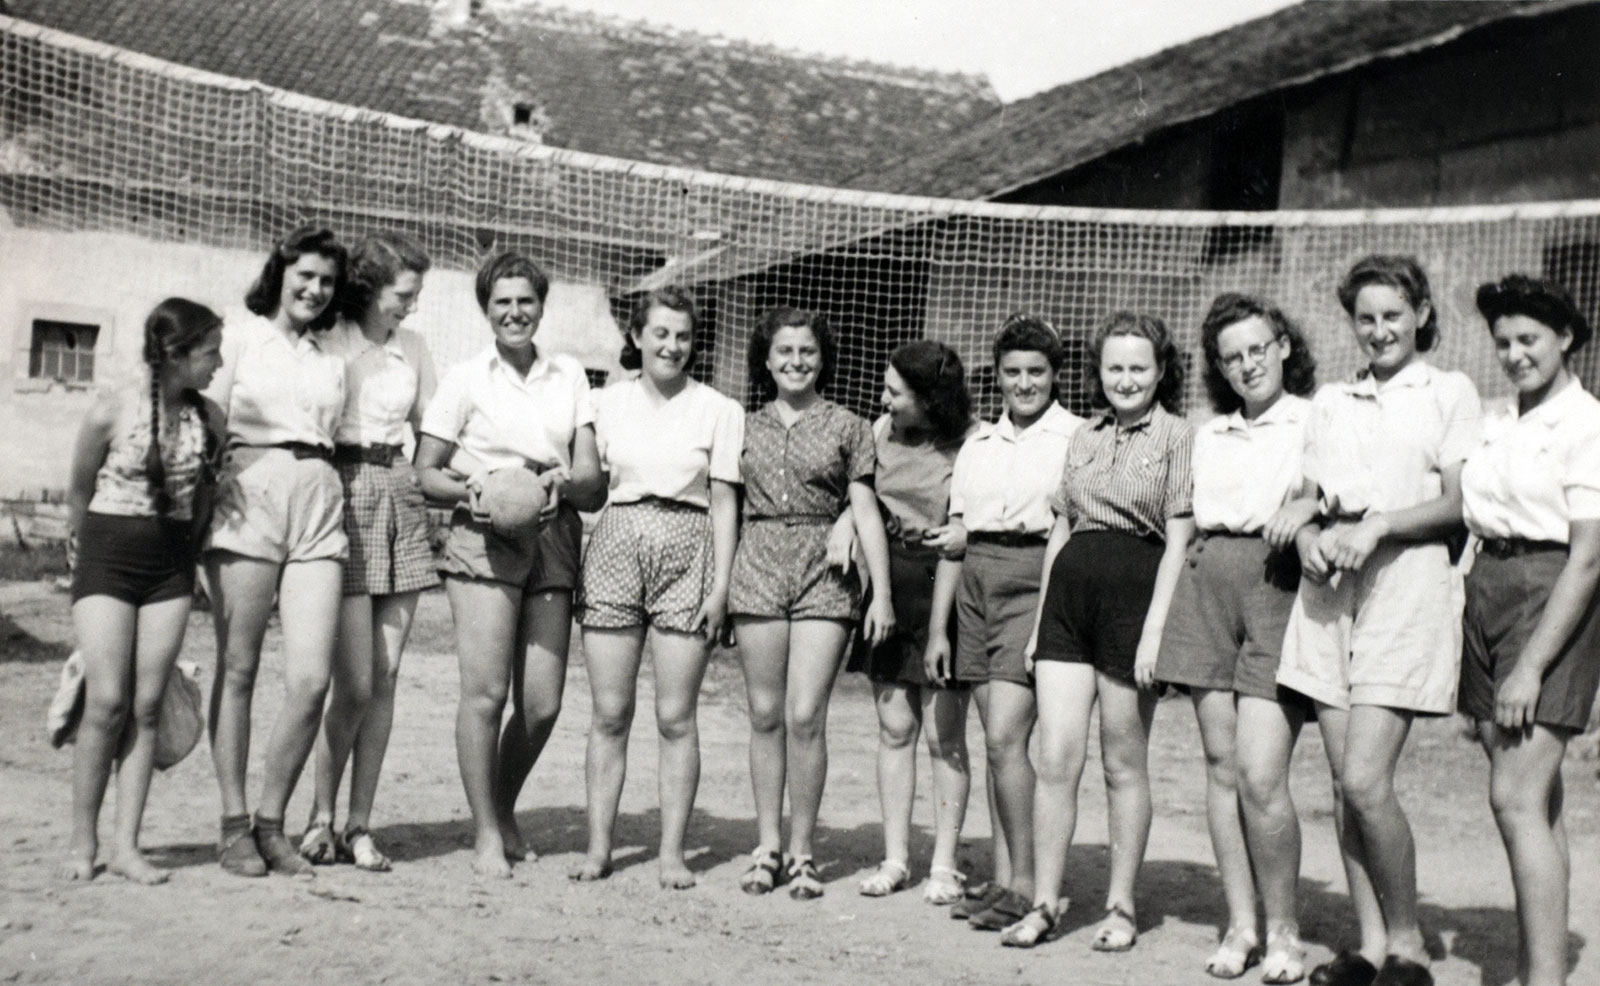 Maccabi youth movement volleyball team. Szenicze, Slovakia, 1940